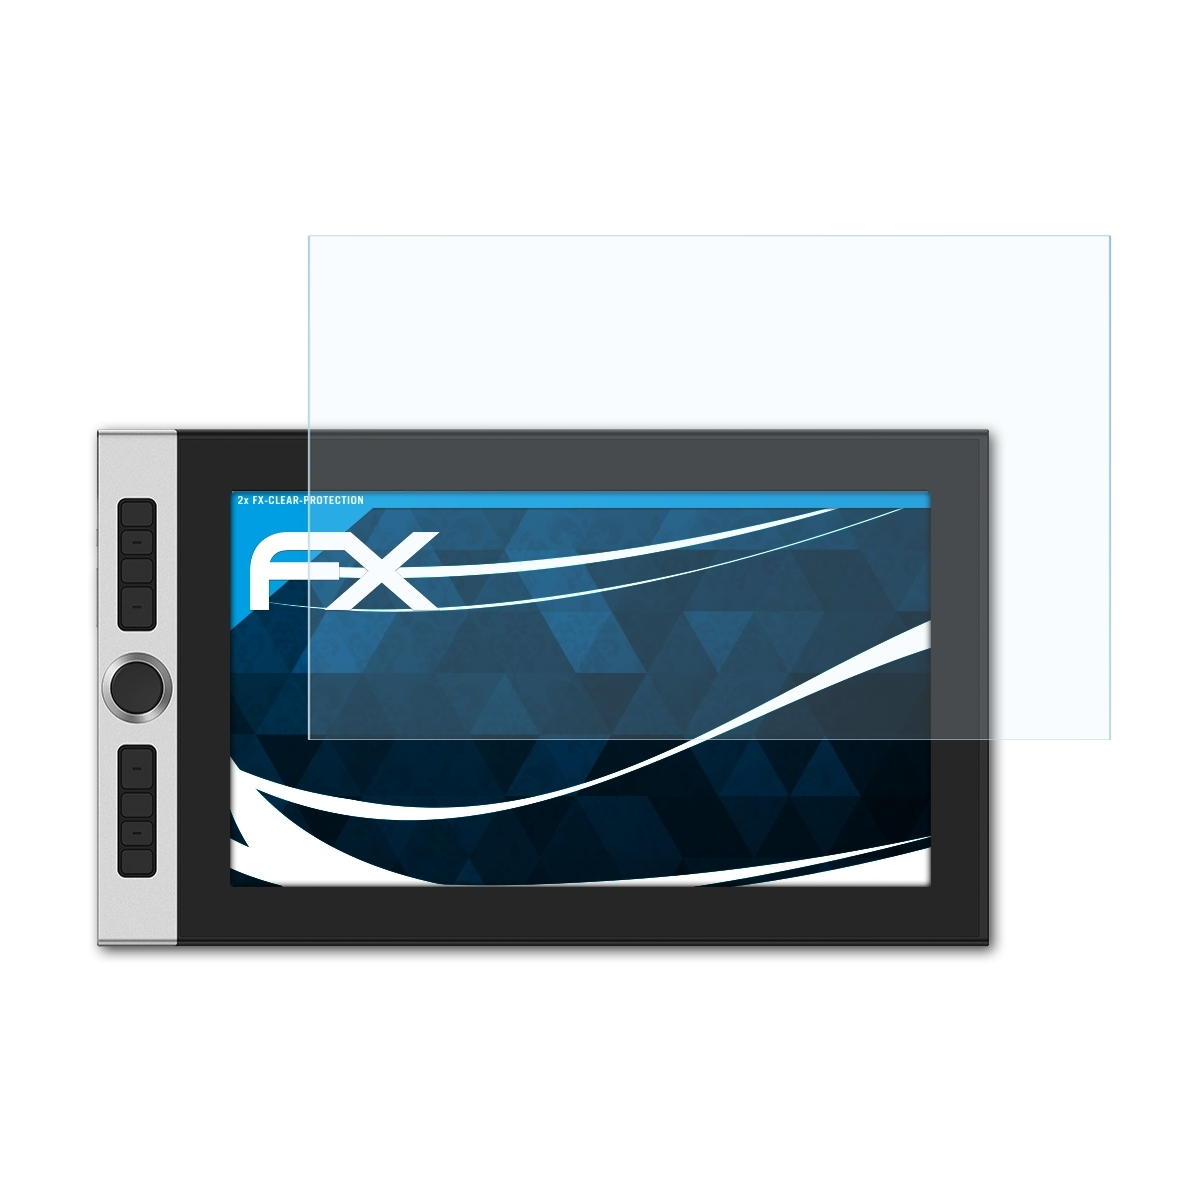 ATFOLIX 2x FX-Clear XP-PEN Innovator Displayschutz(für 16)